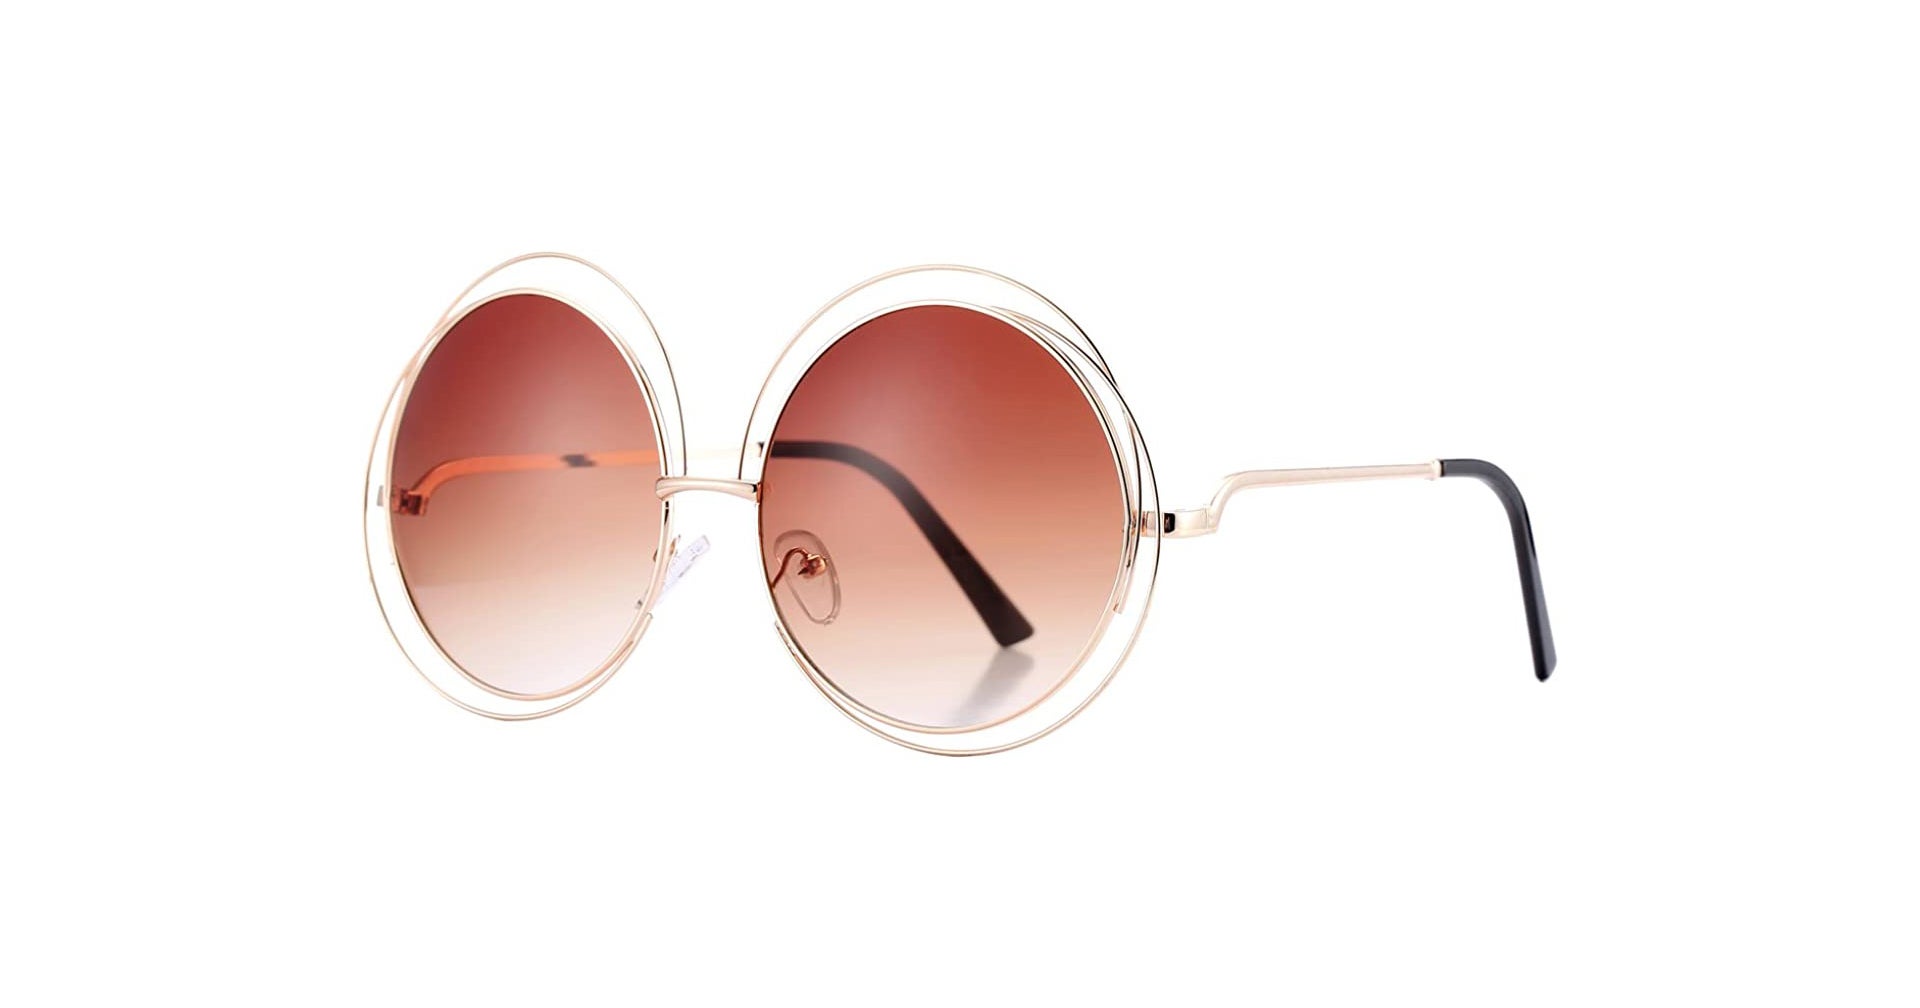 17 Of The Best Amazon Sunglasses Under $20